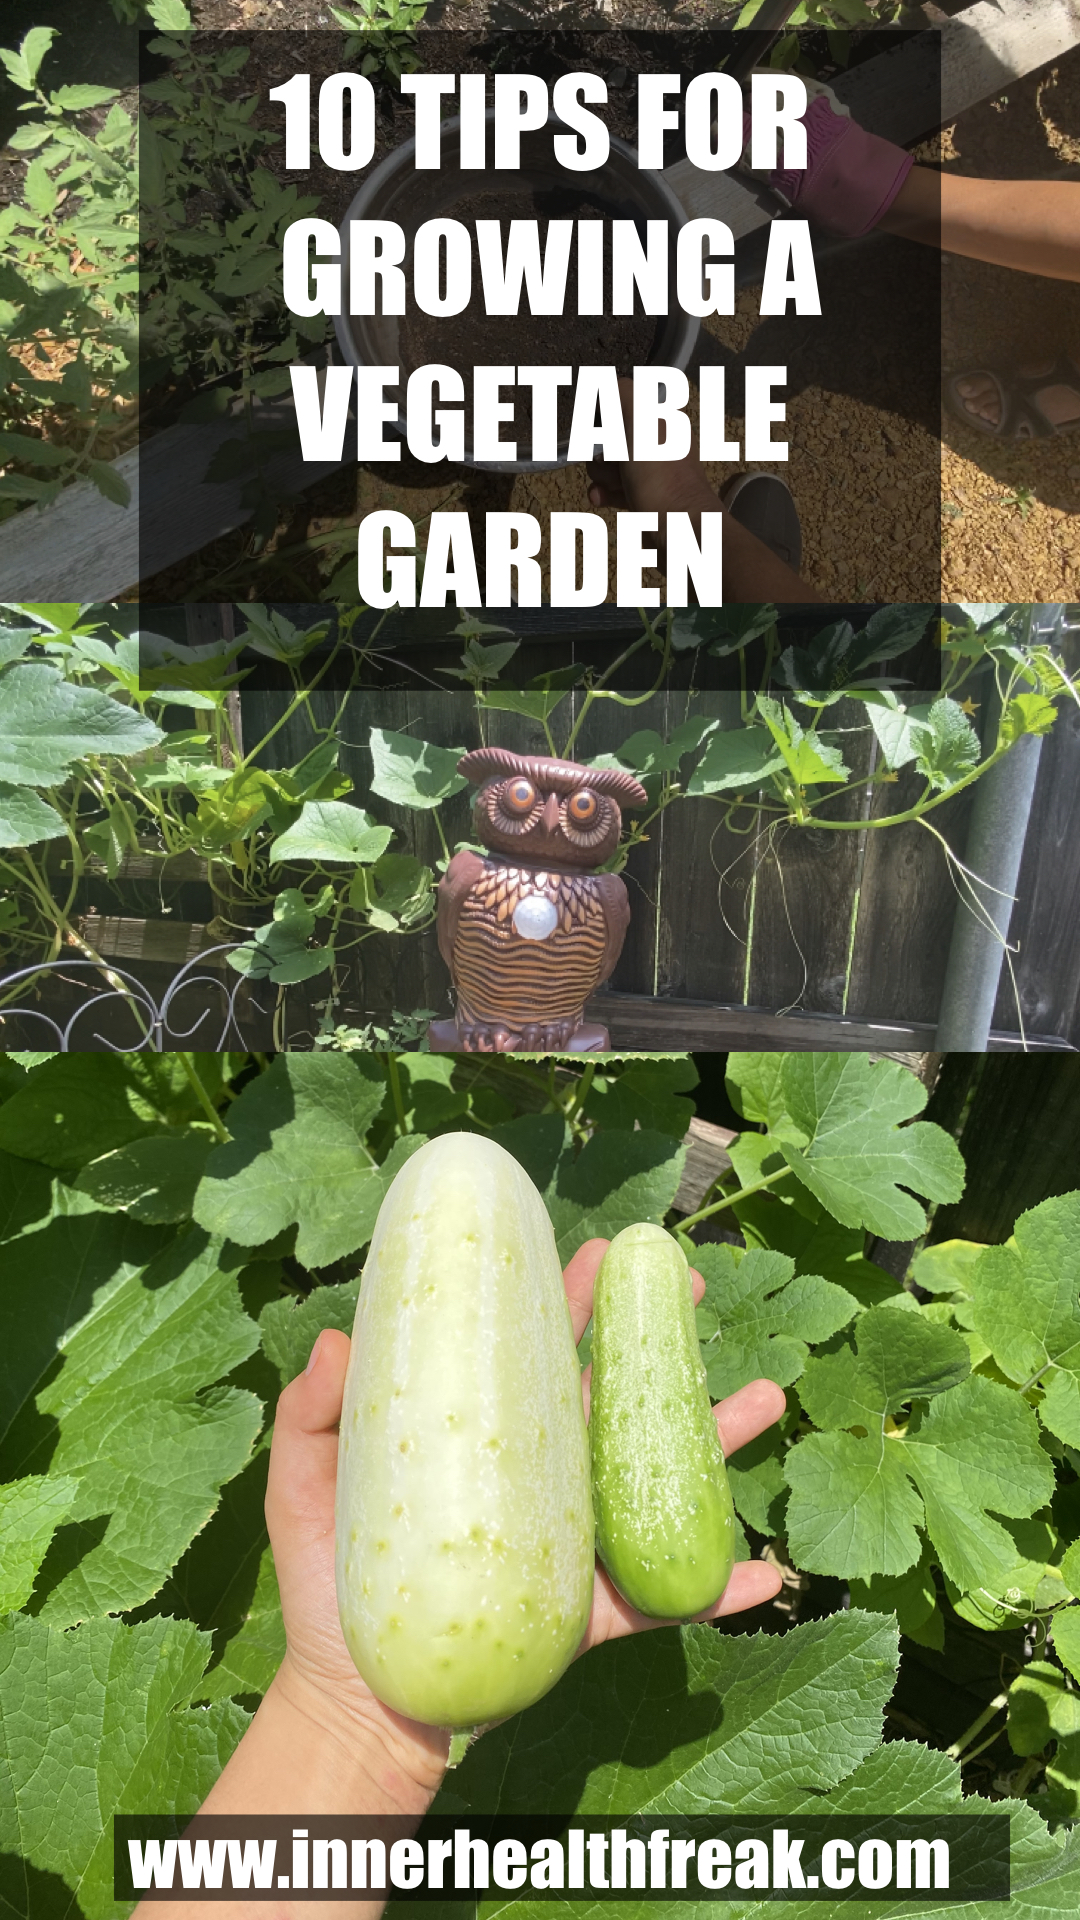 10 tips for growing a vegetable garden